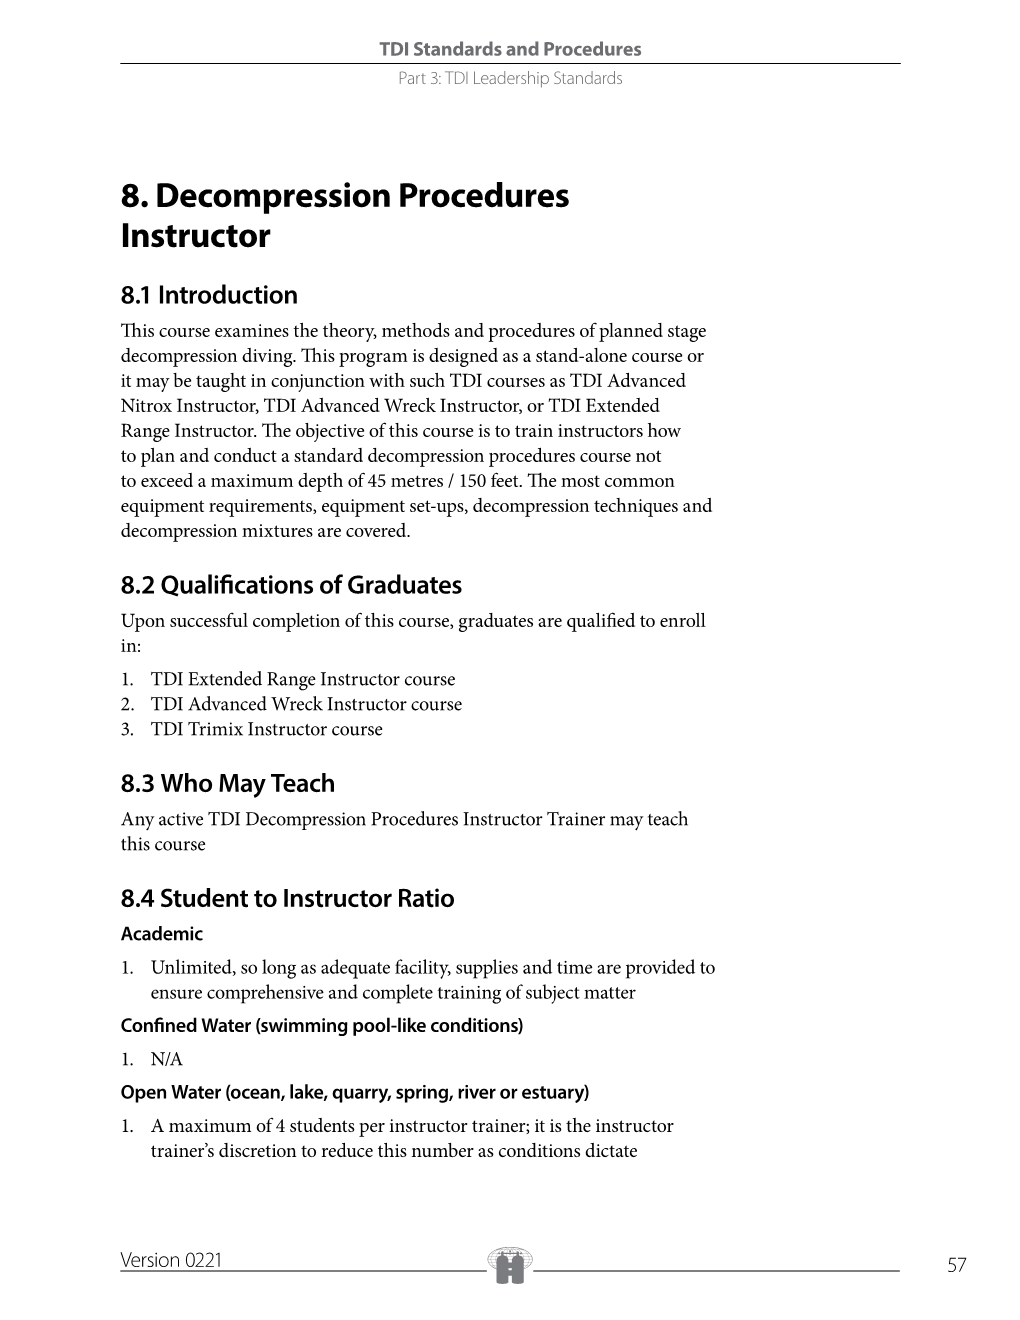 8. Decompression Procedures Instructor